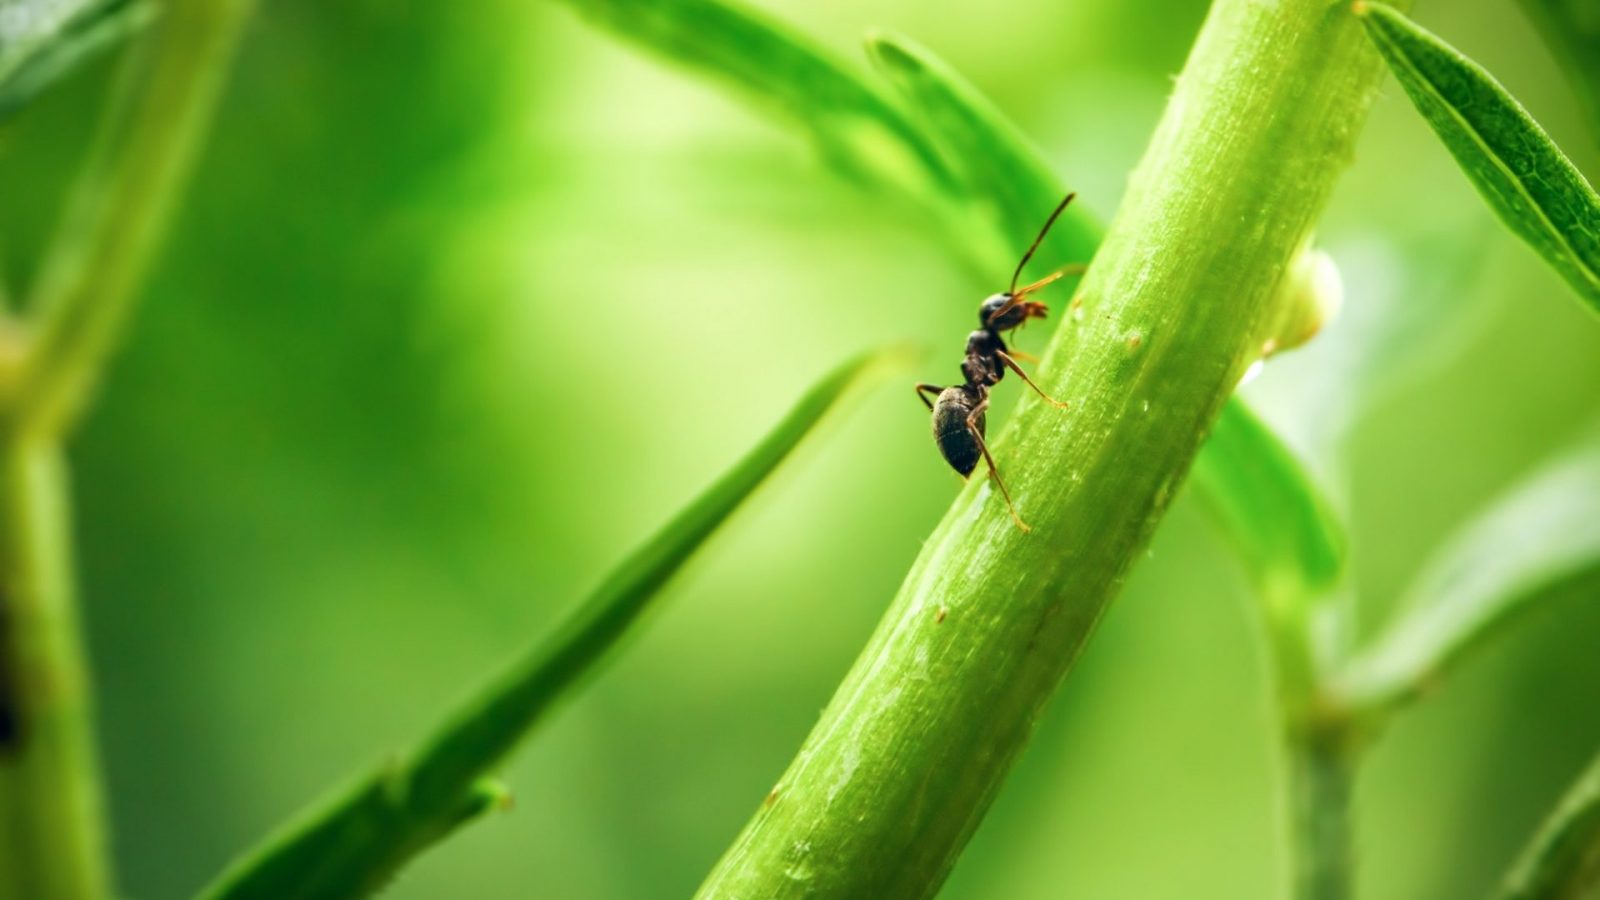 Ant walking on green plant stem